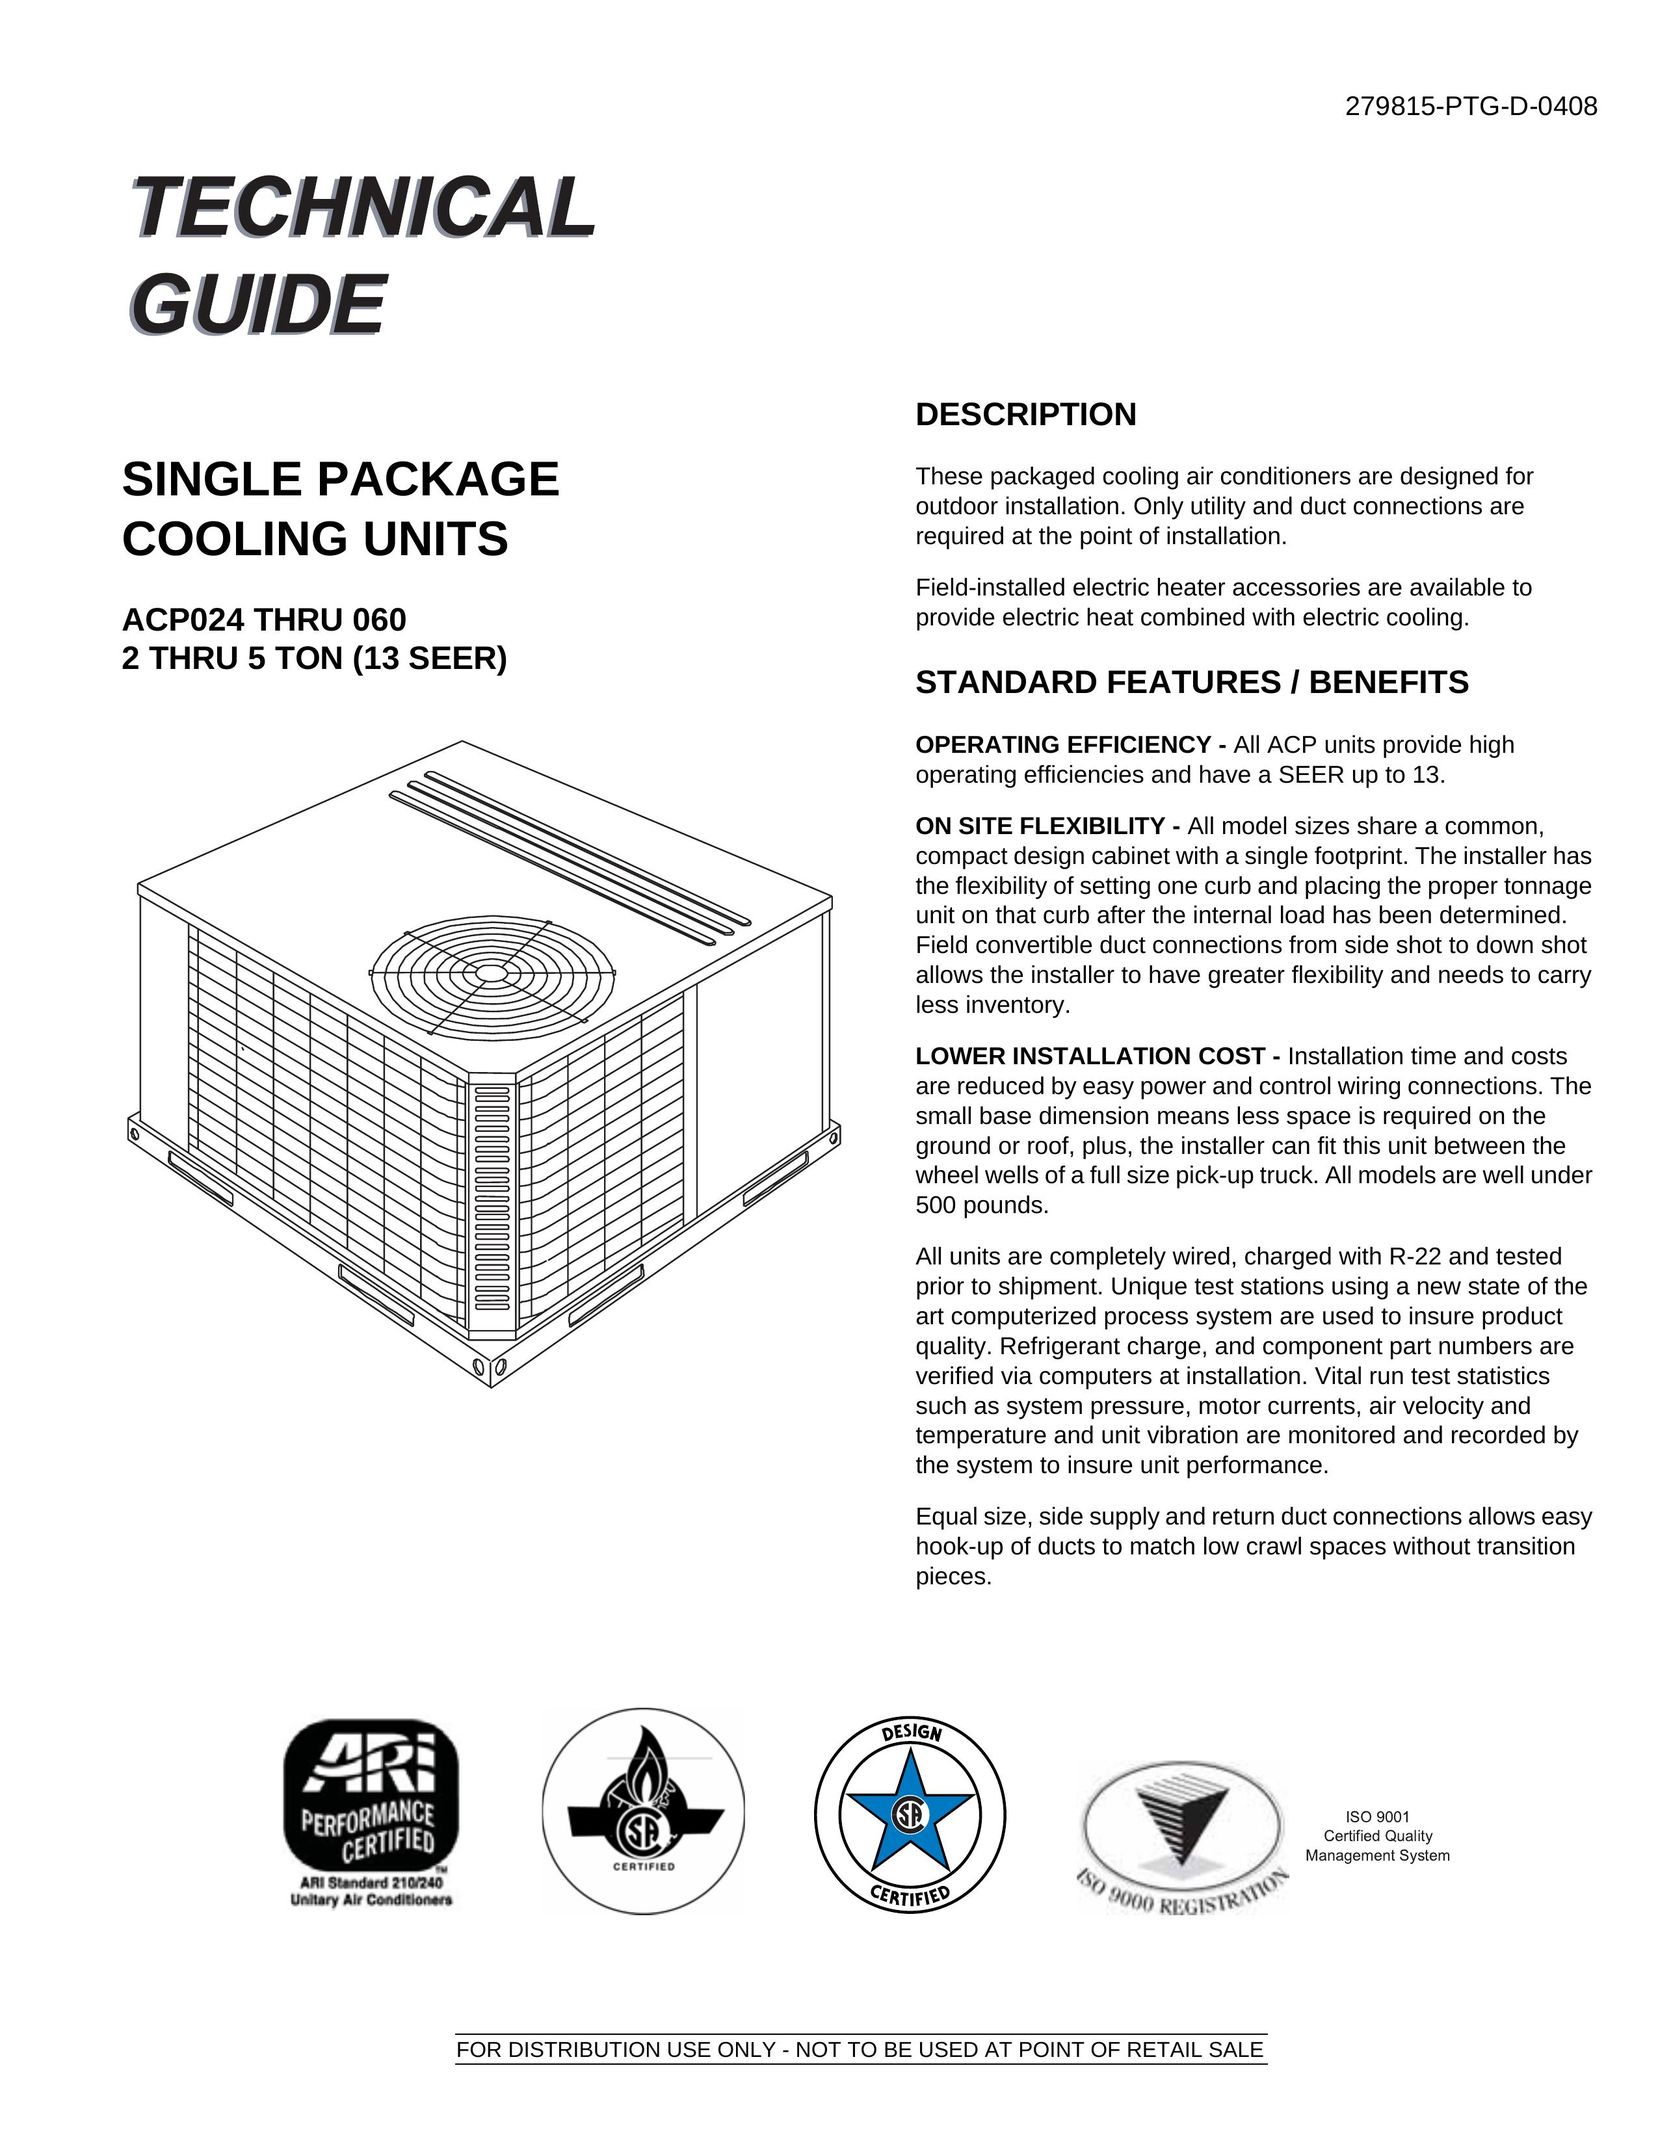 Johnson Controls ACPU024 THRU 060 Air Conditioner User Manual